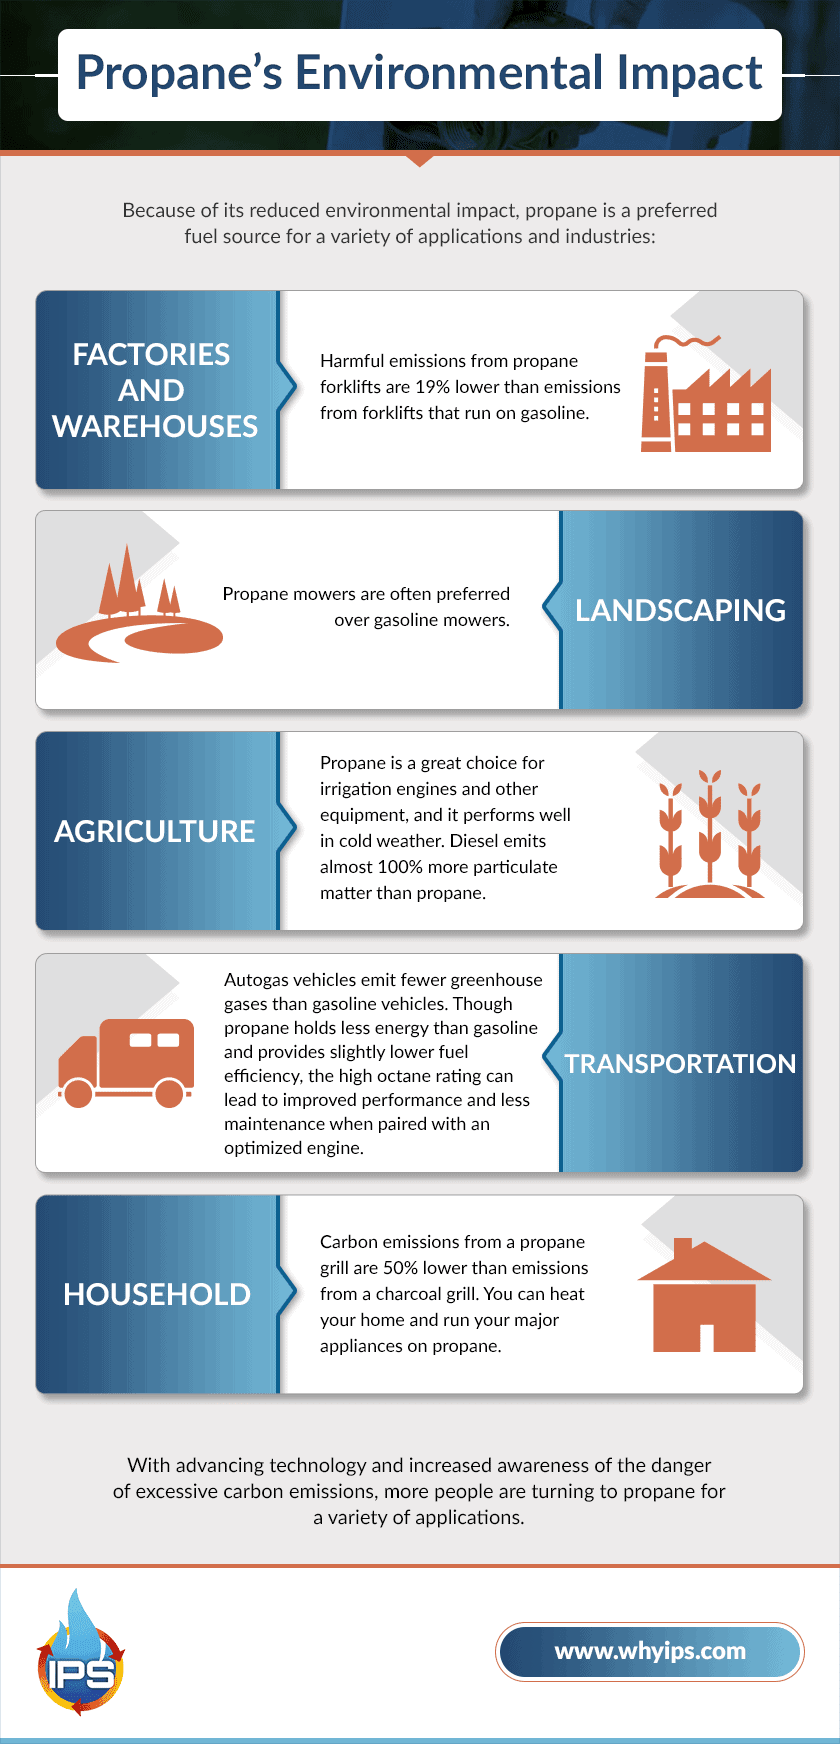 An infographic explaining propane's environmental impact